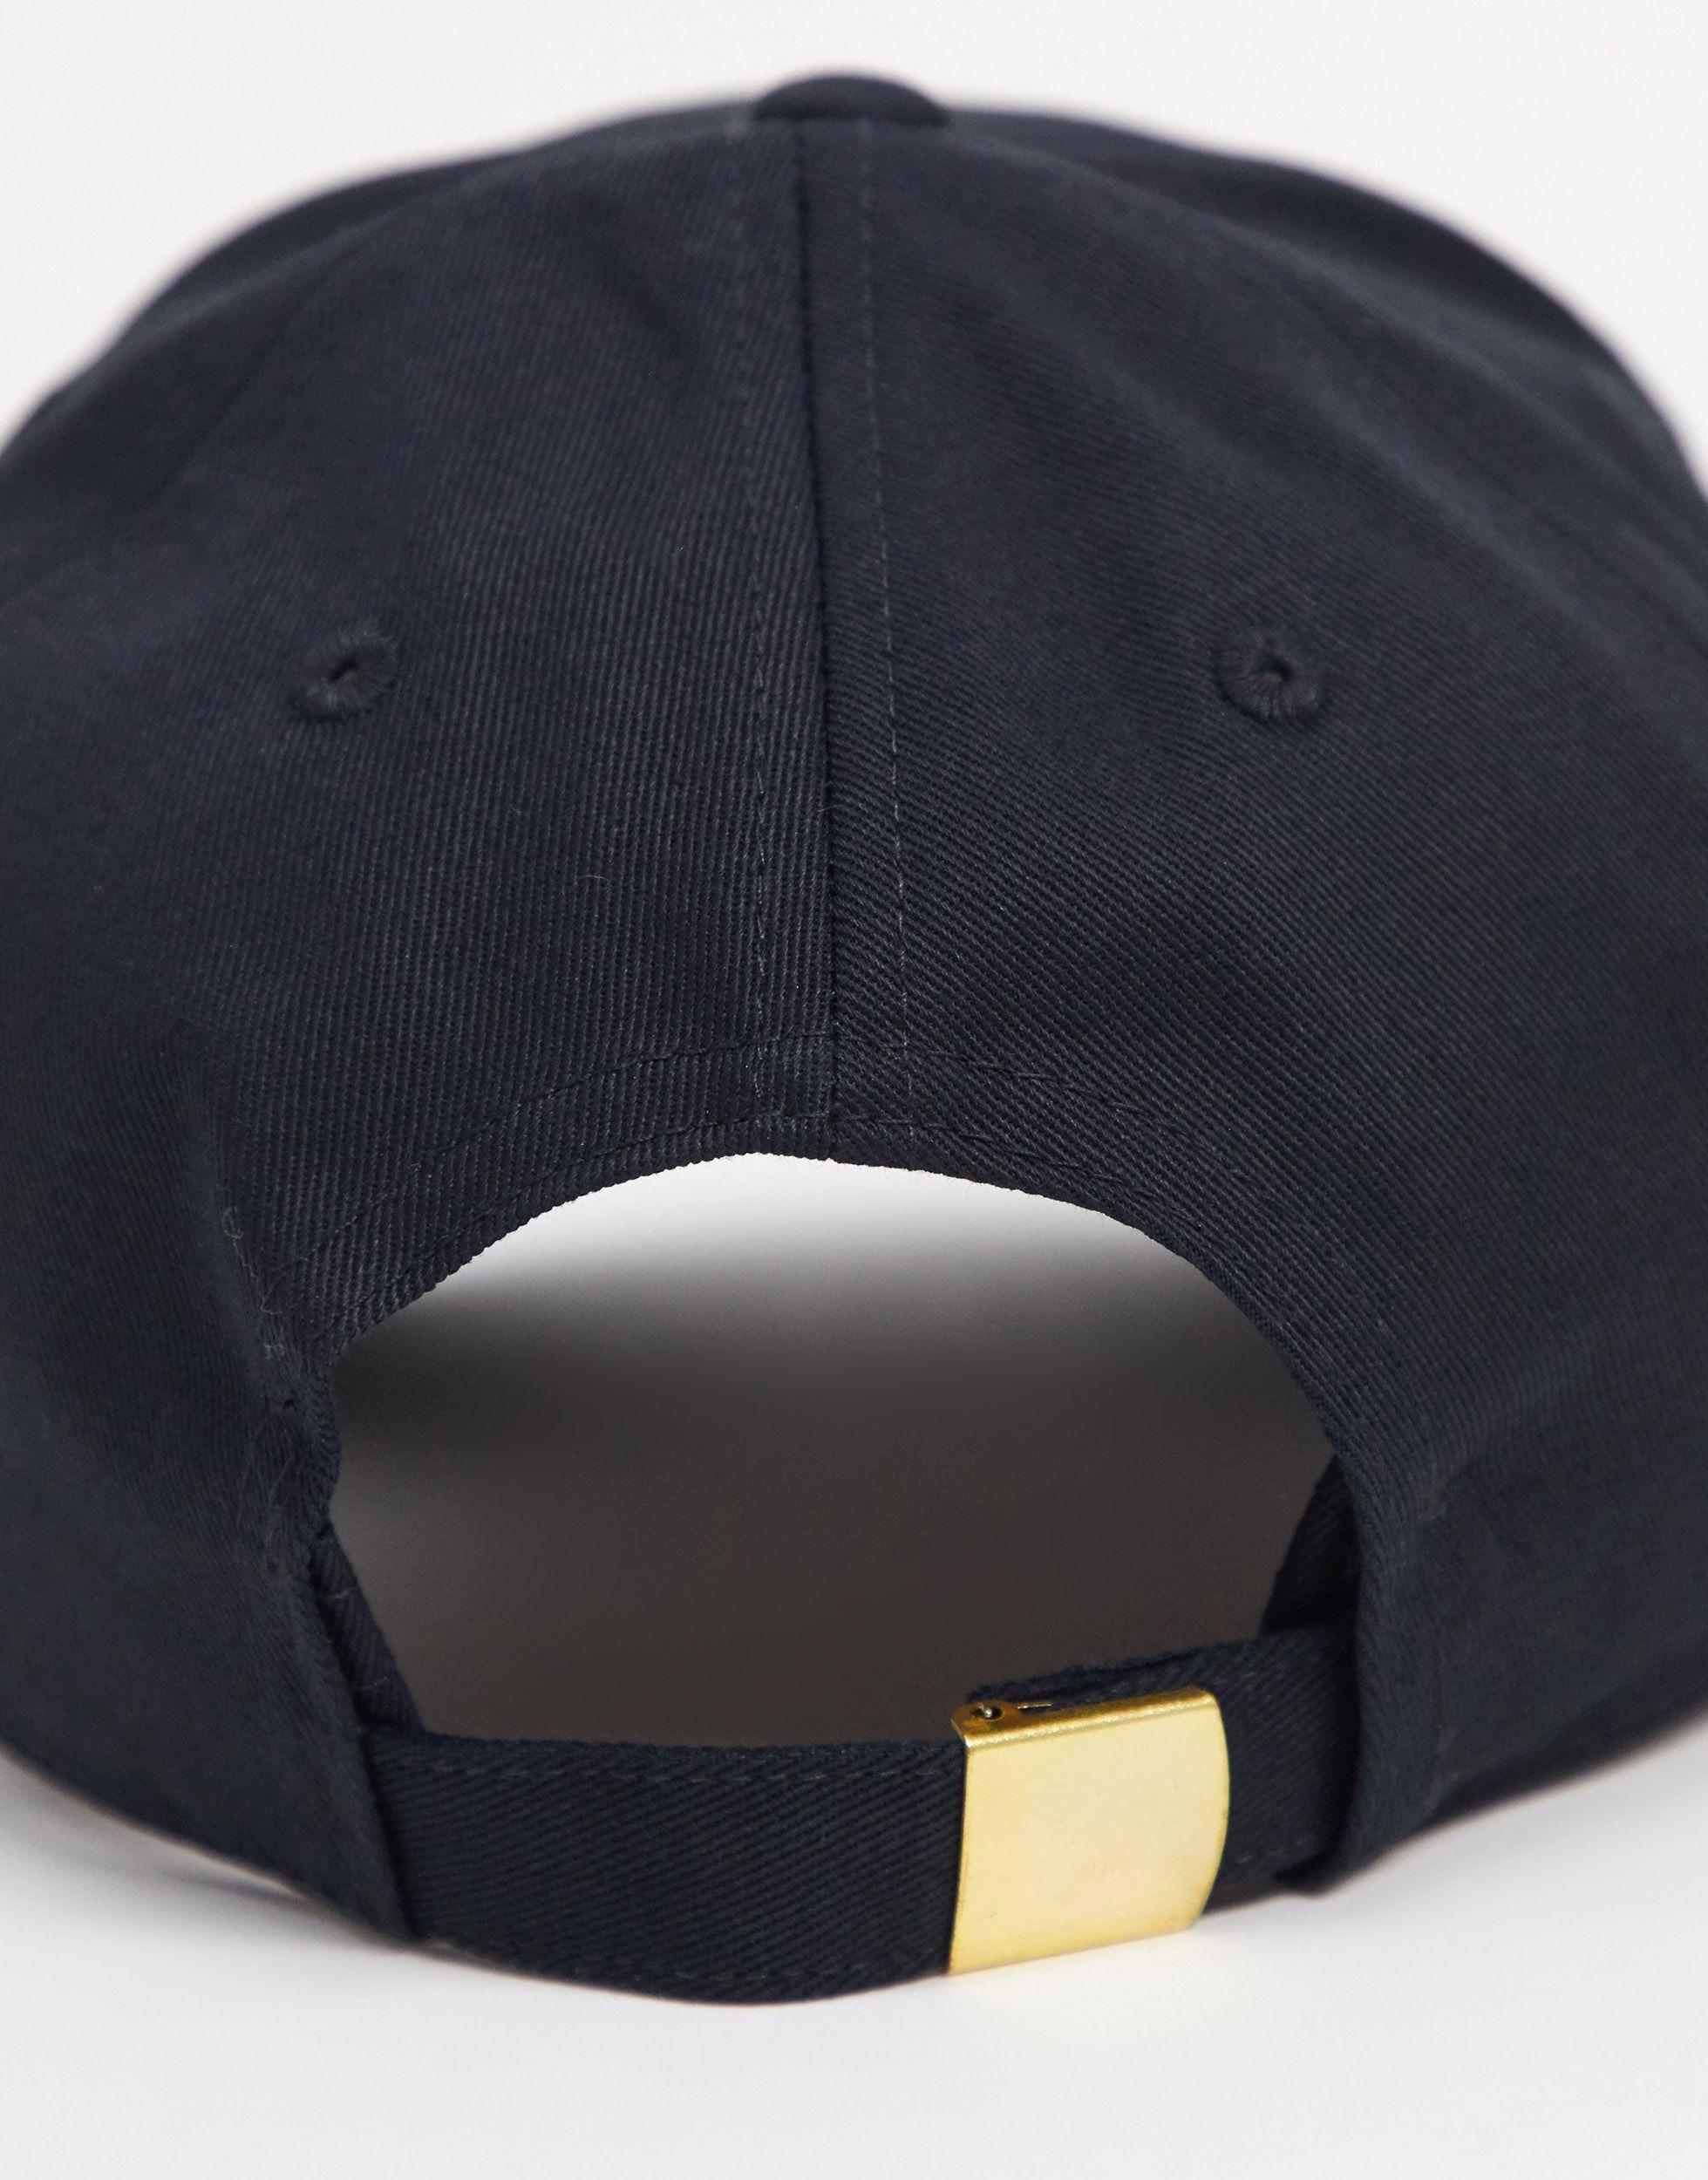 Nike Metallic Cap With Gold Logo in Black for Men | Lyst